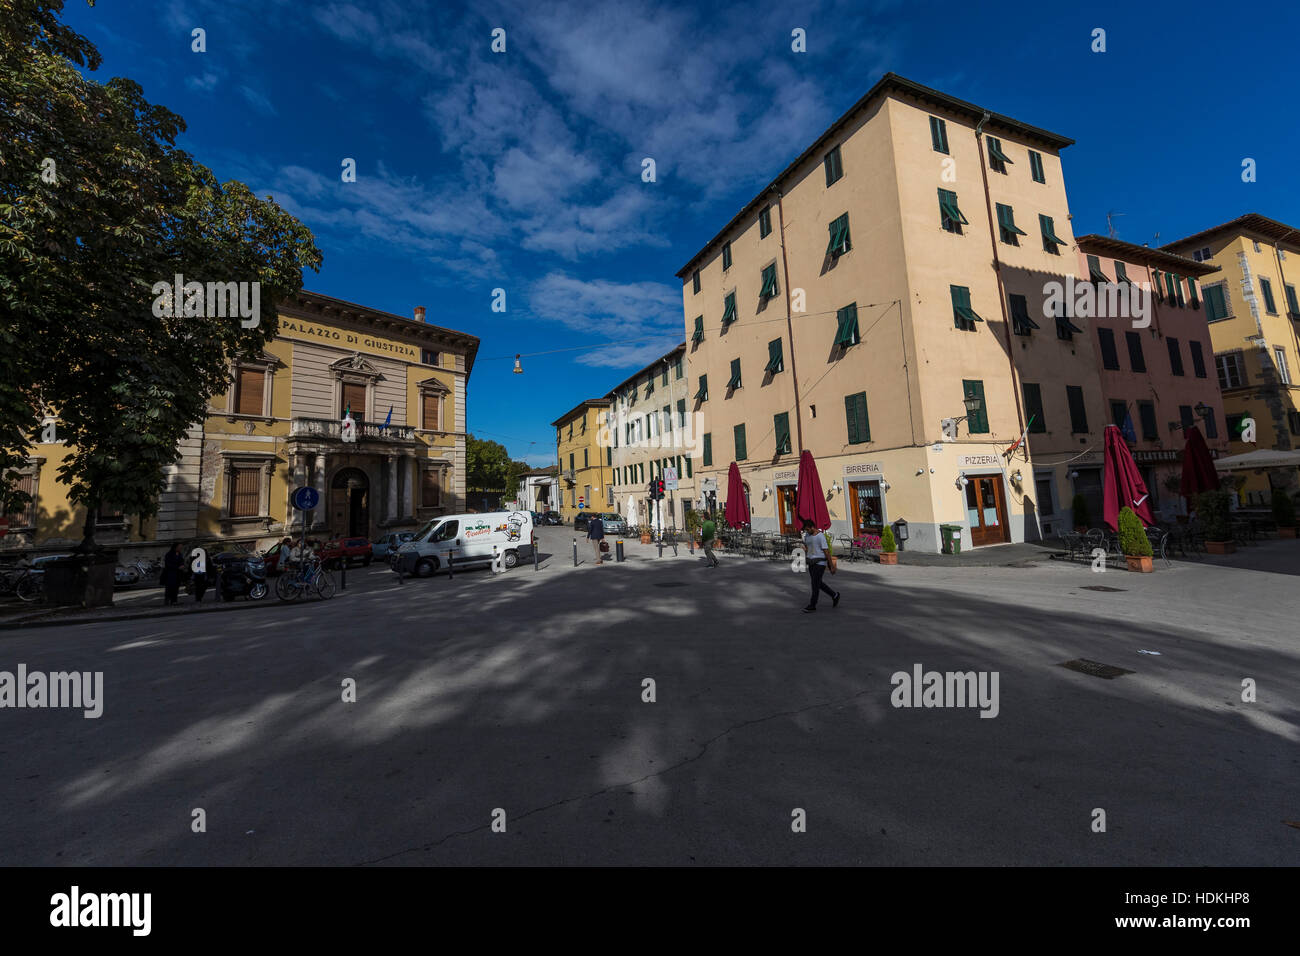 Via Veneto Dolce Vita High Resolution Stock Photography and Images - Alamy